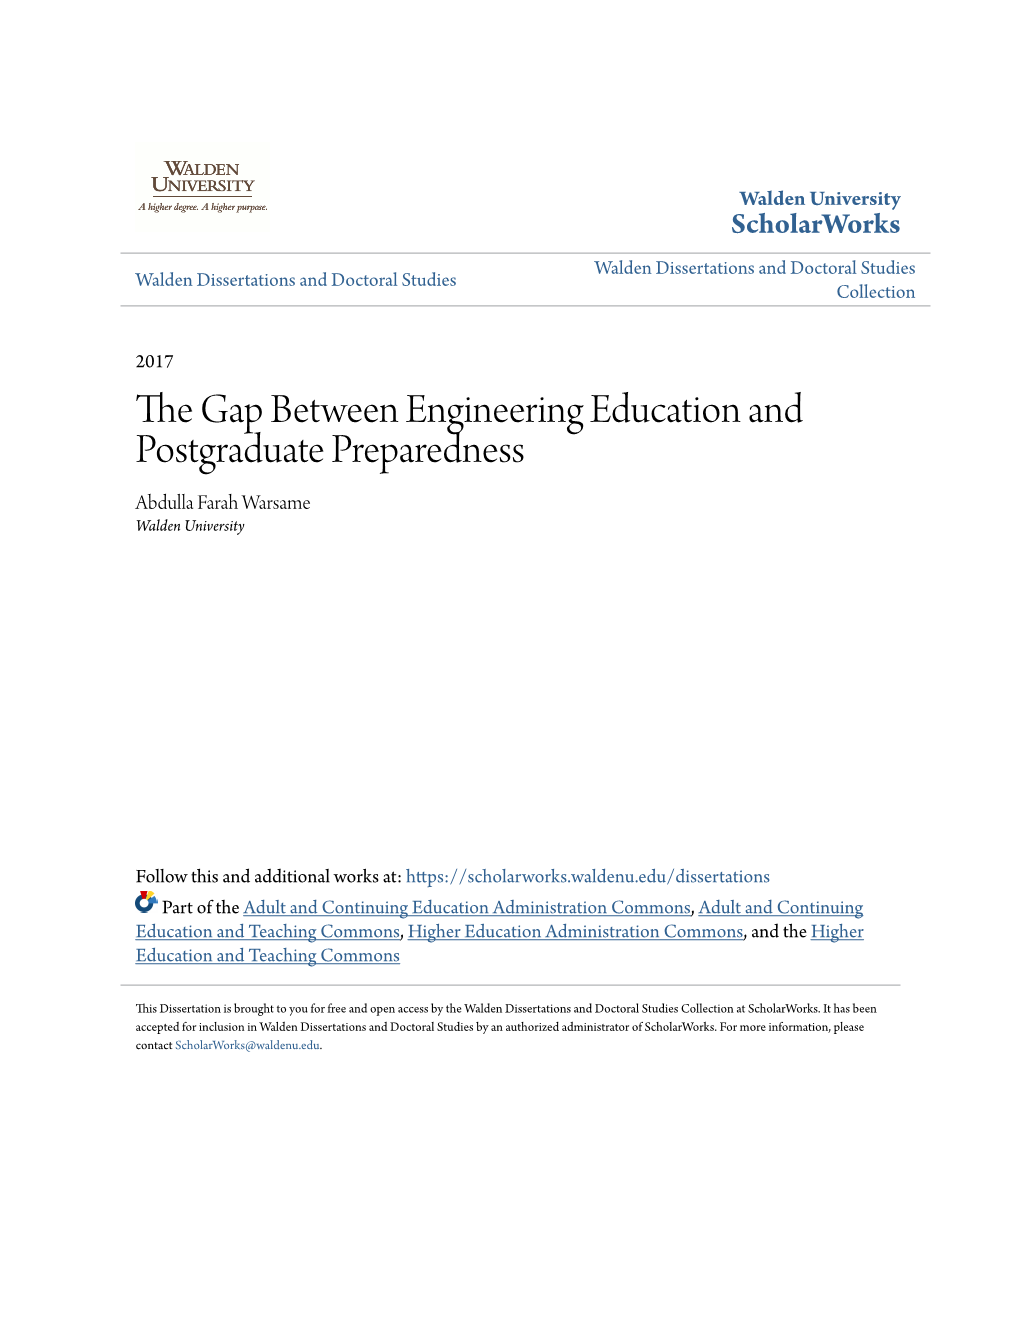 The Gap Between Engineering Education and Postgraduate Preparedness